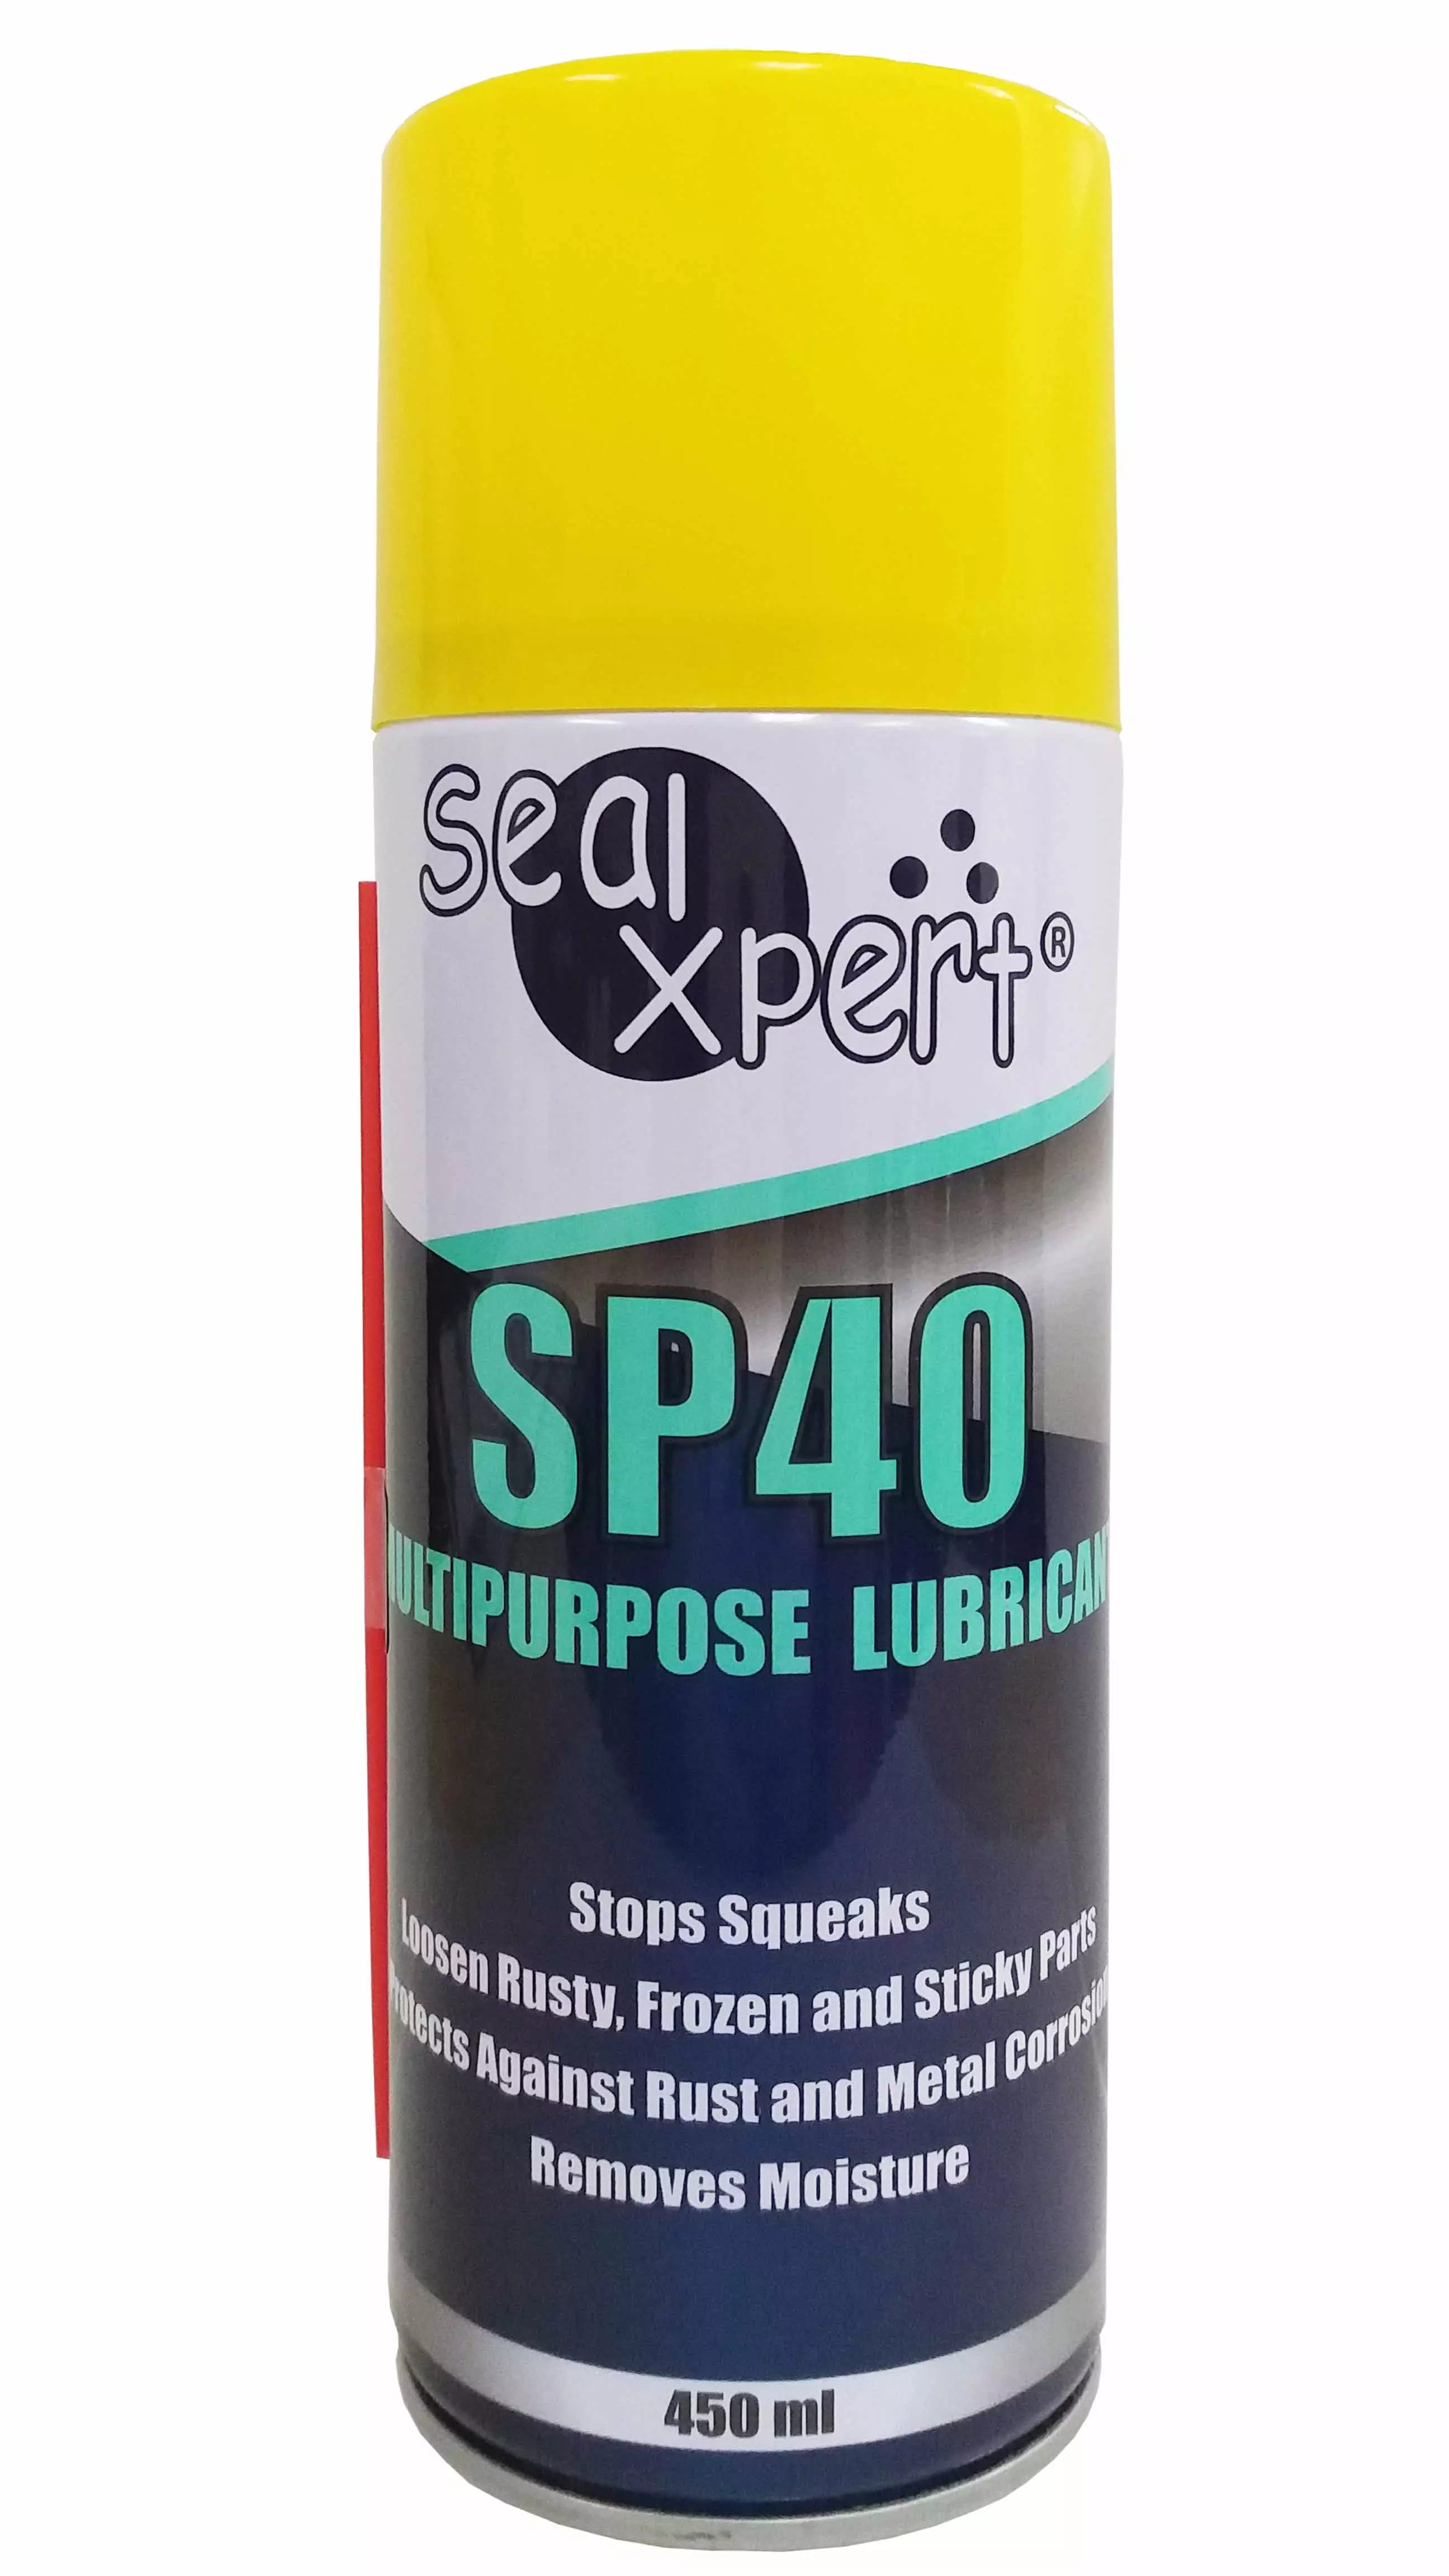 SP40 Multipurpose Lubricant - Home (EN)